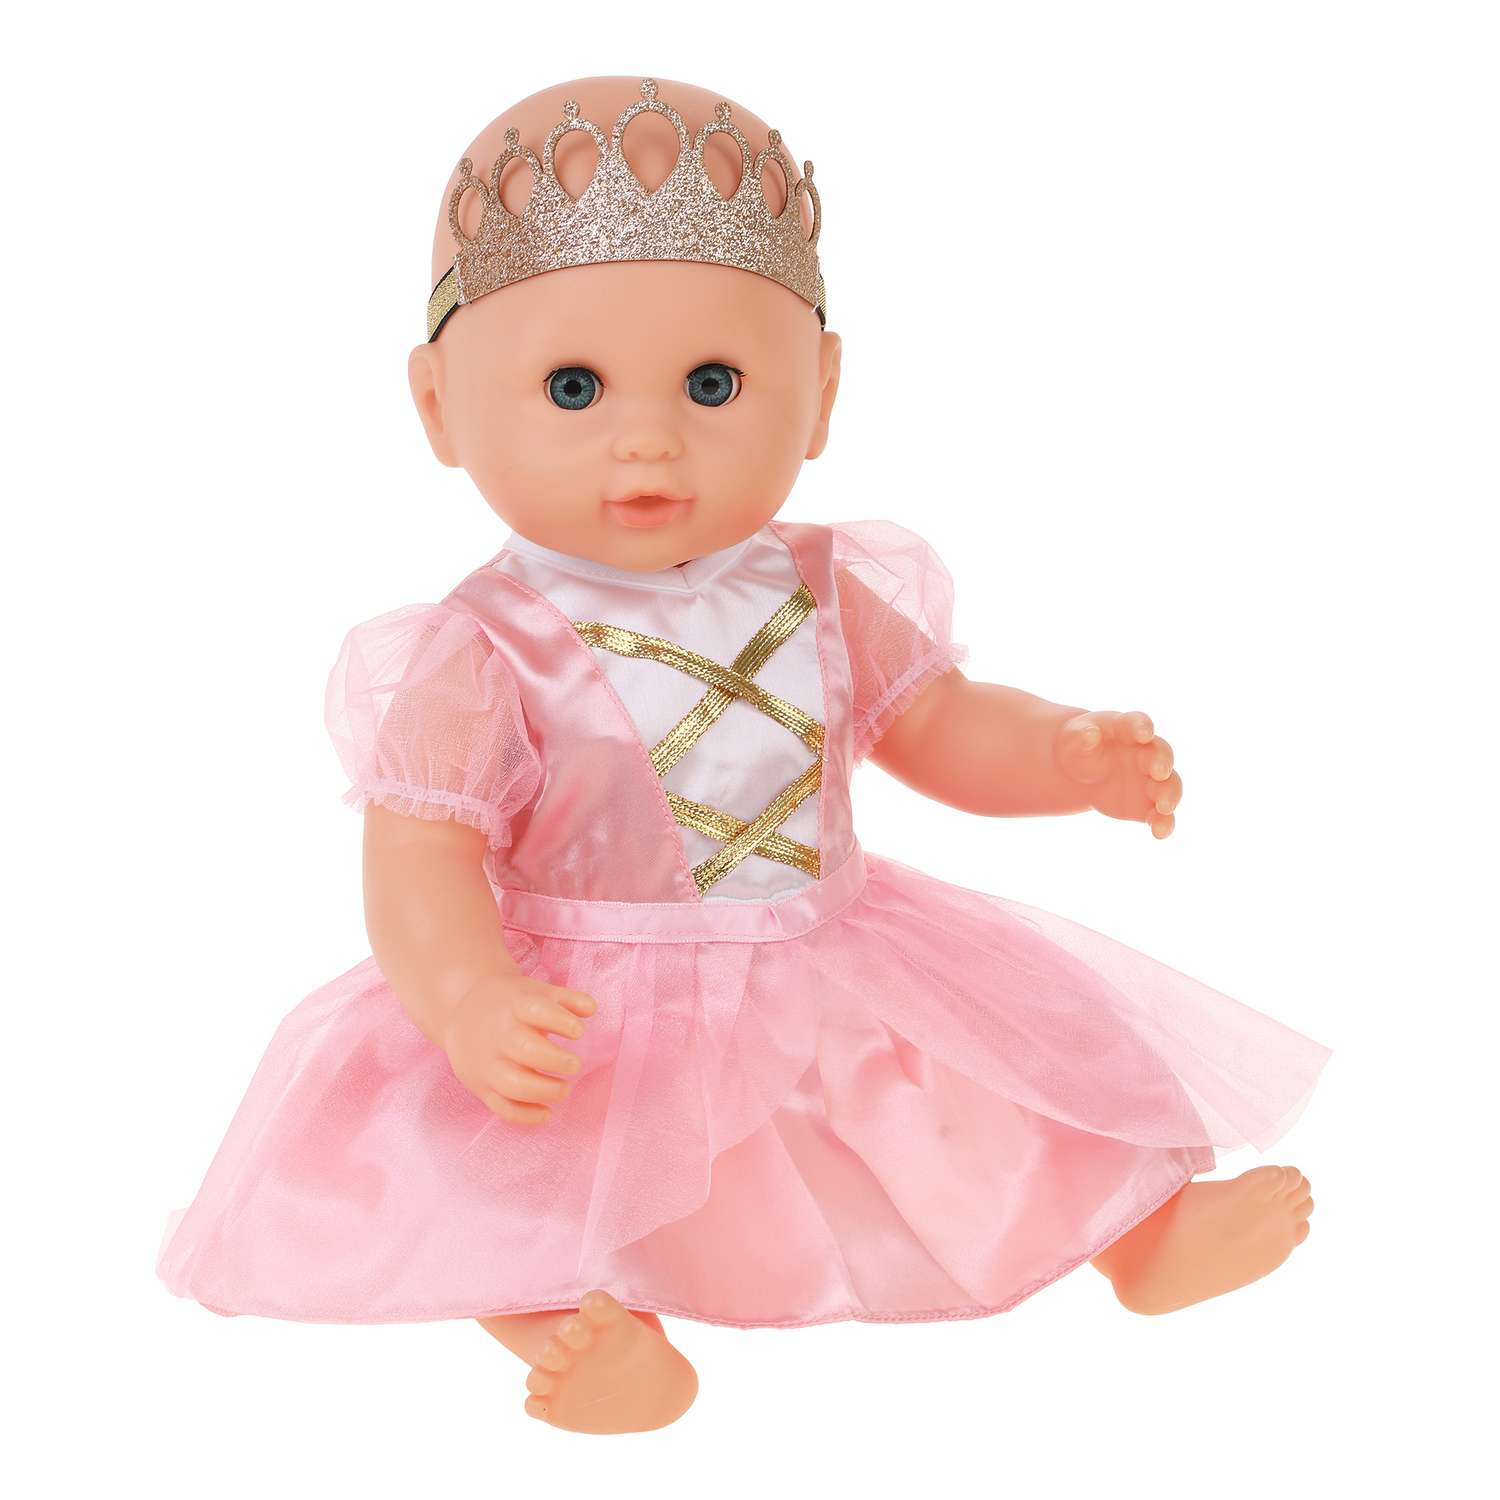 Одежда для кукол Mary Poppins платье и повязка Принцесса 452185 - фото 2